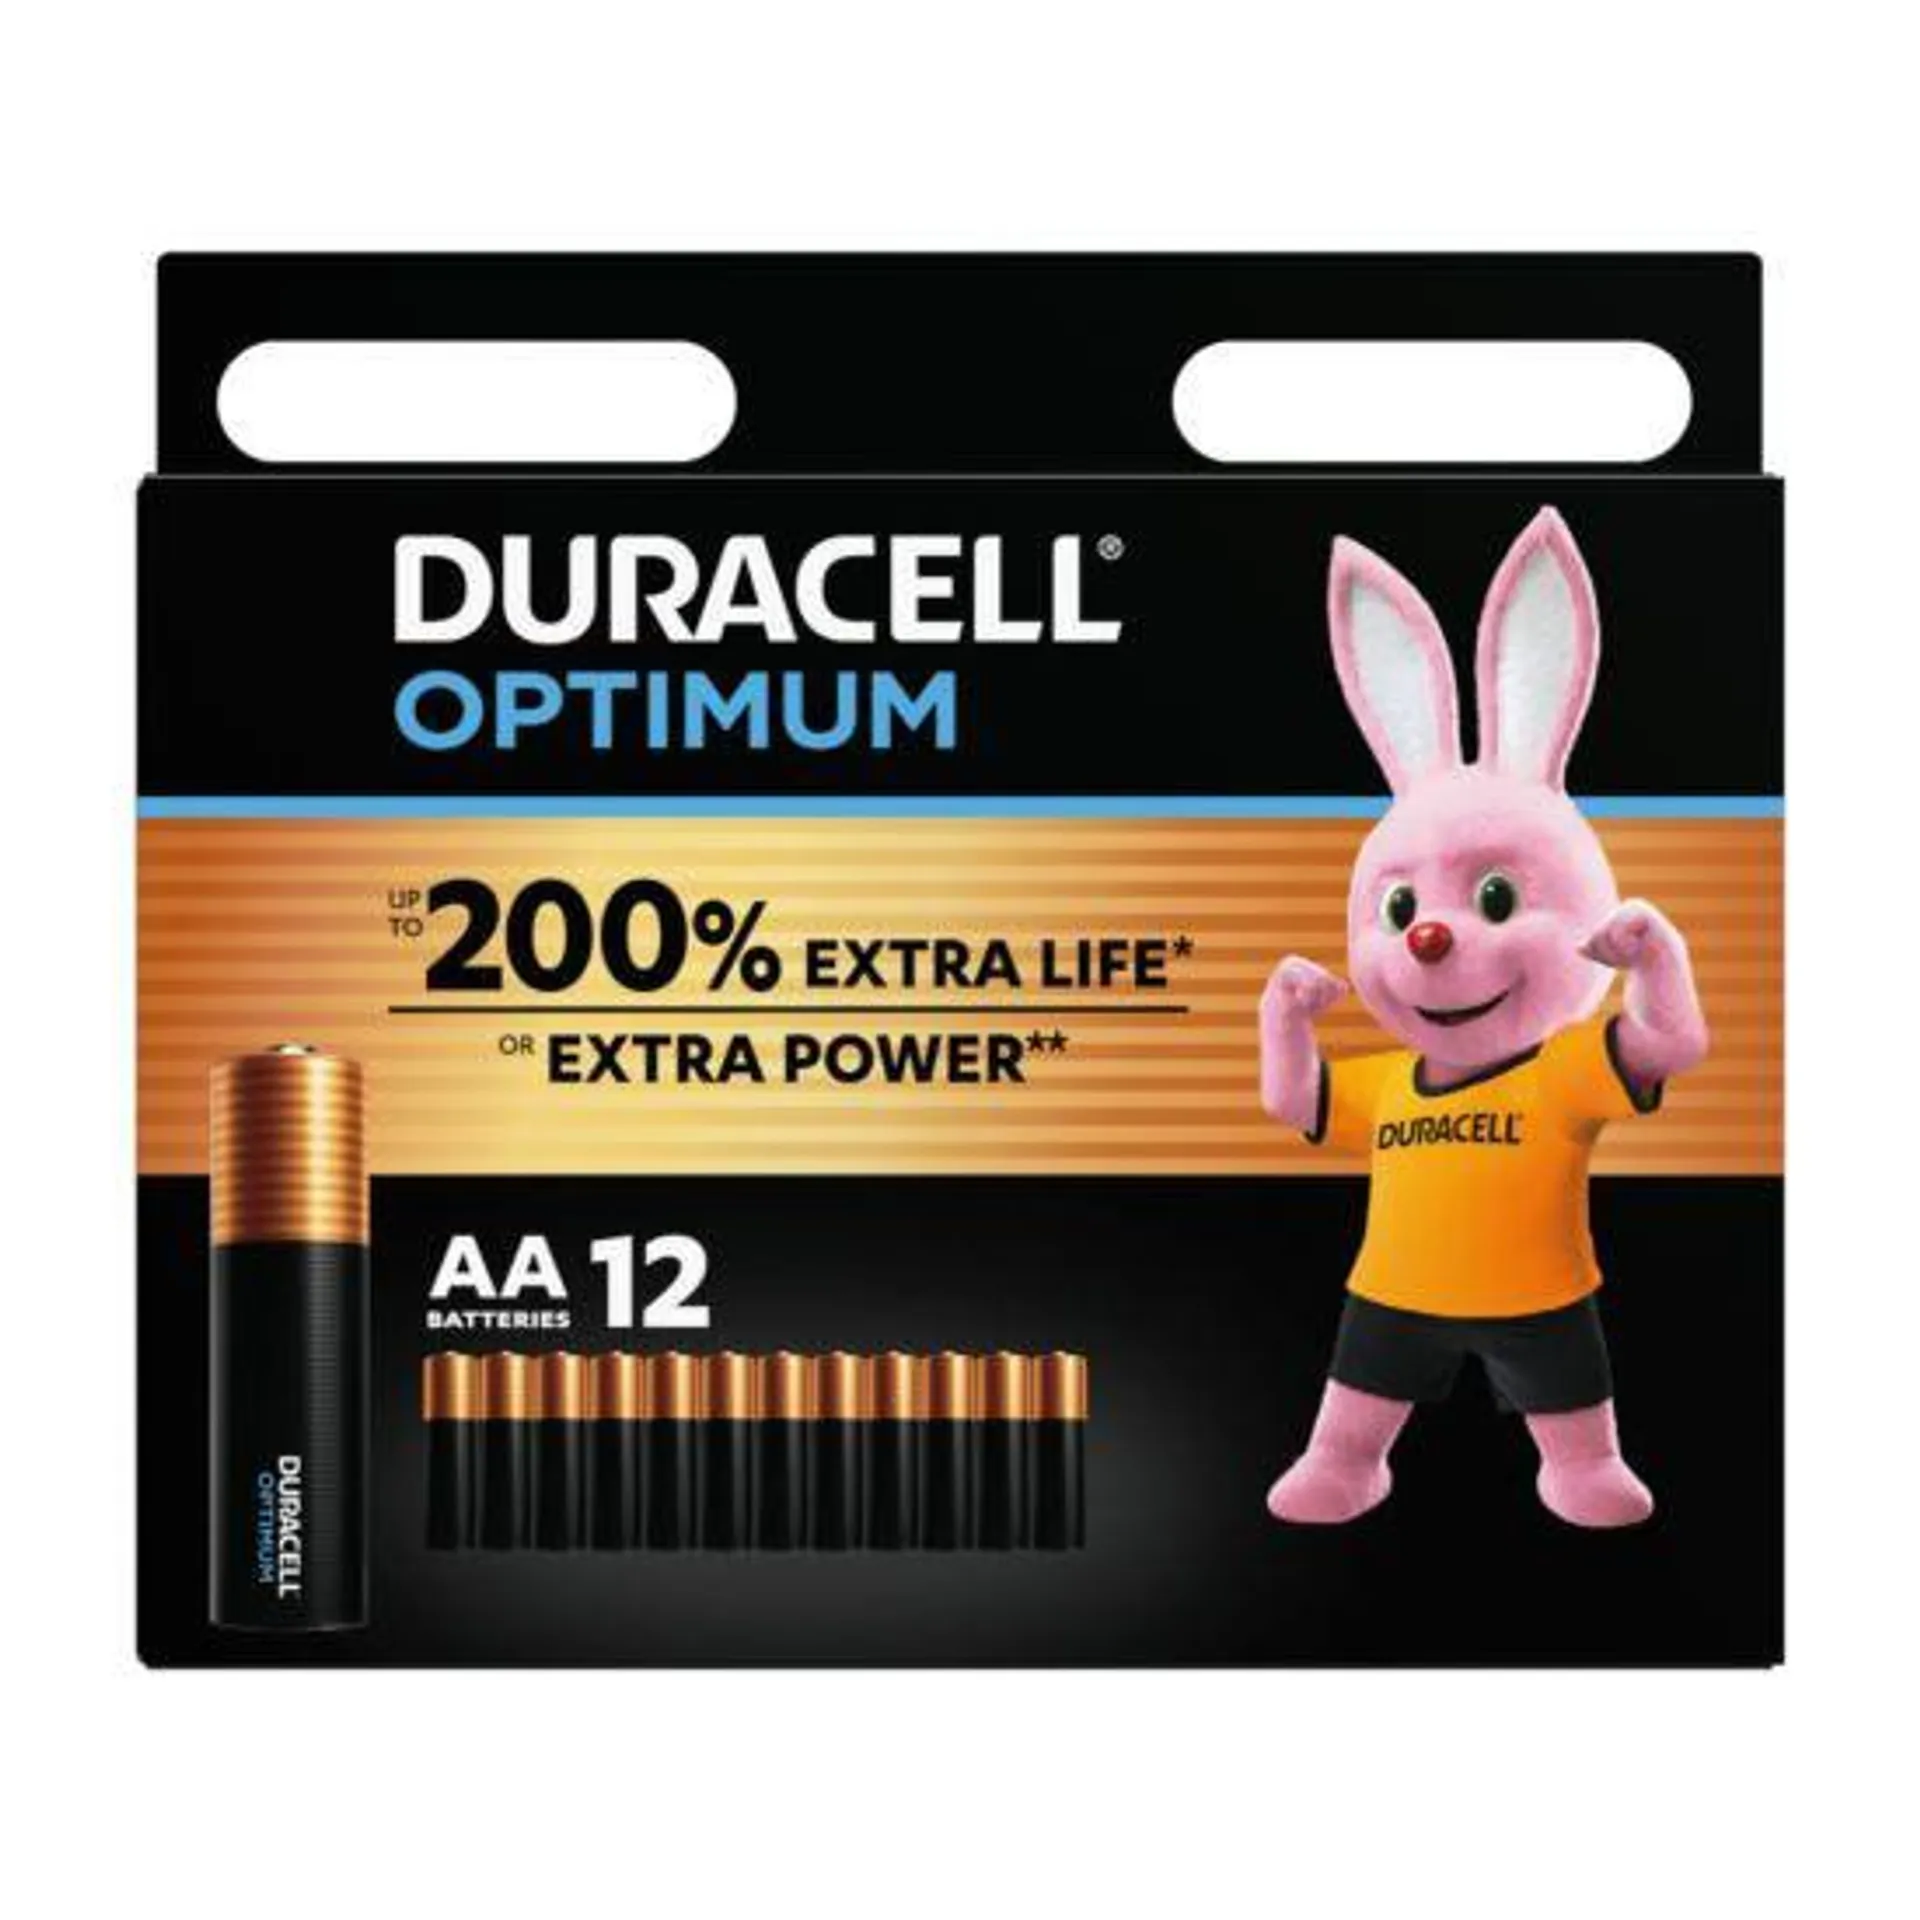 Duracell Optimum AA Batteries - 12 Pack